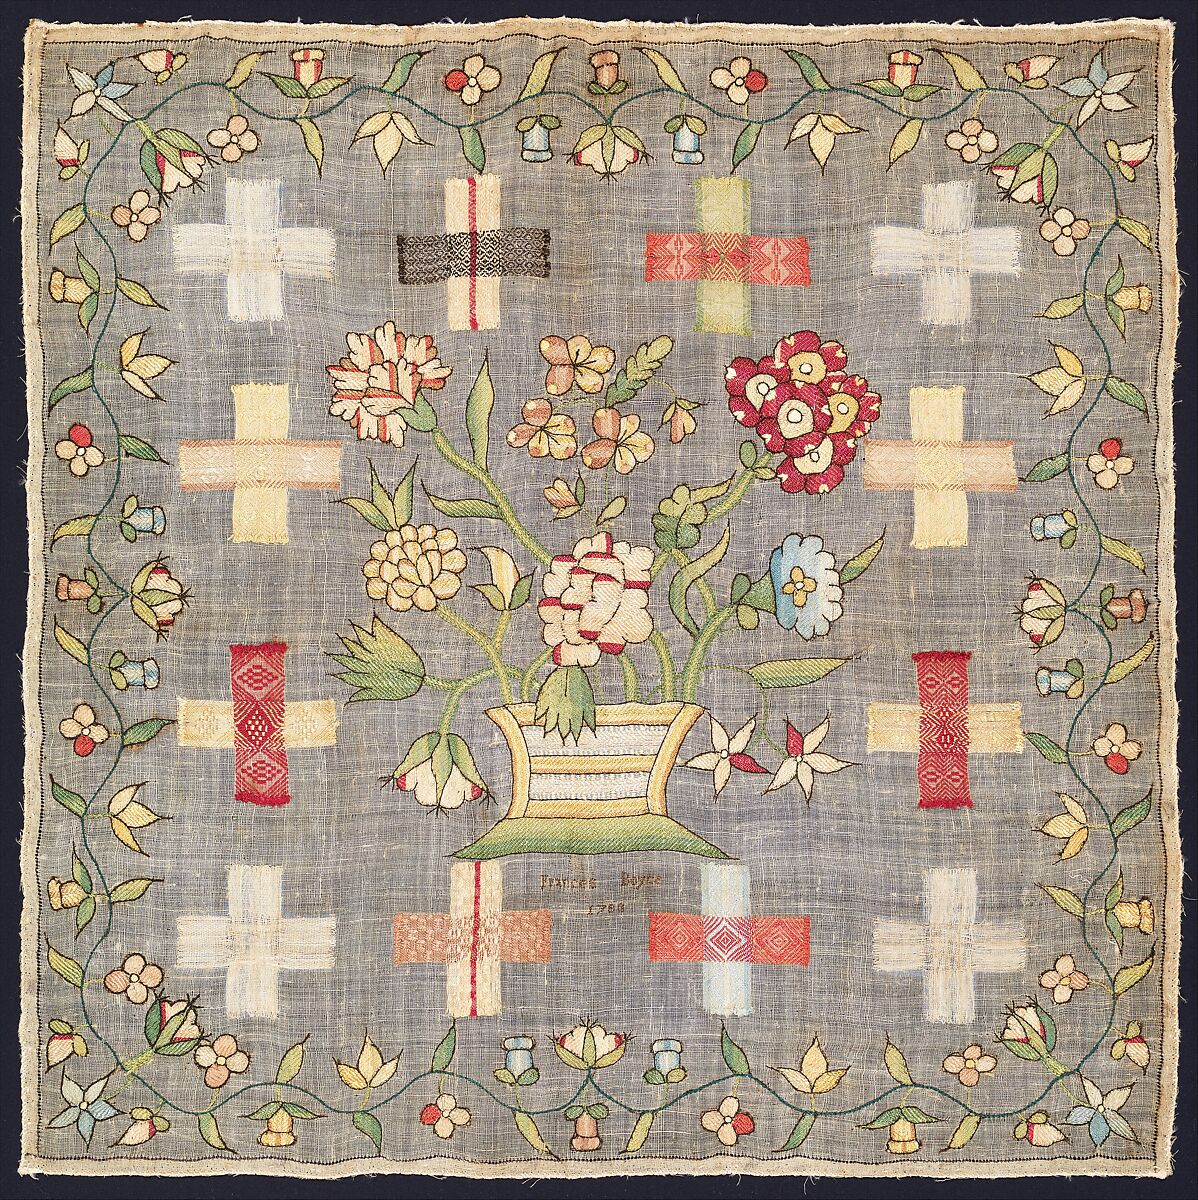 Embroidered darning sampler, Frances Boyce (British), Silk embroidery on linen, British 